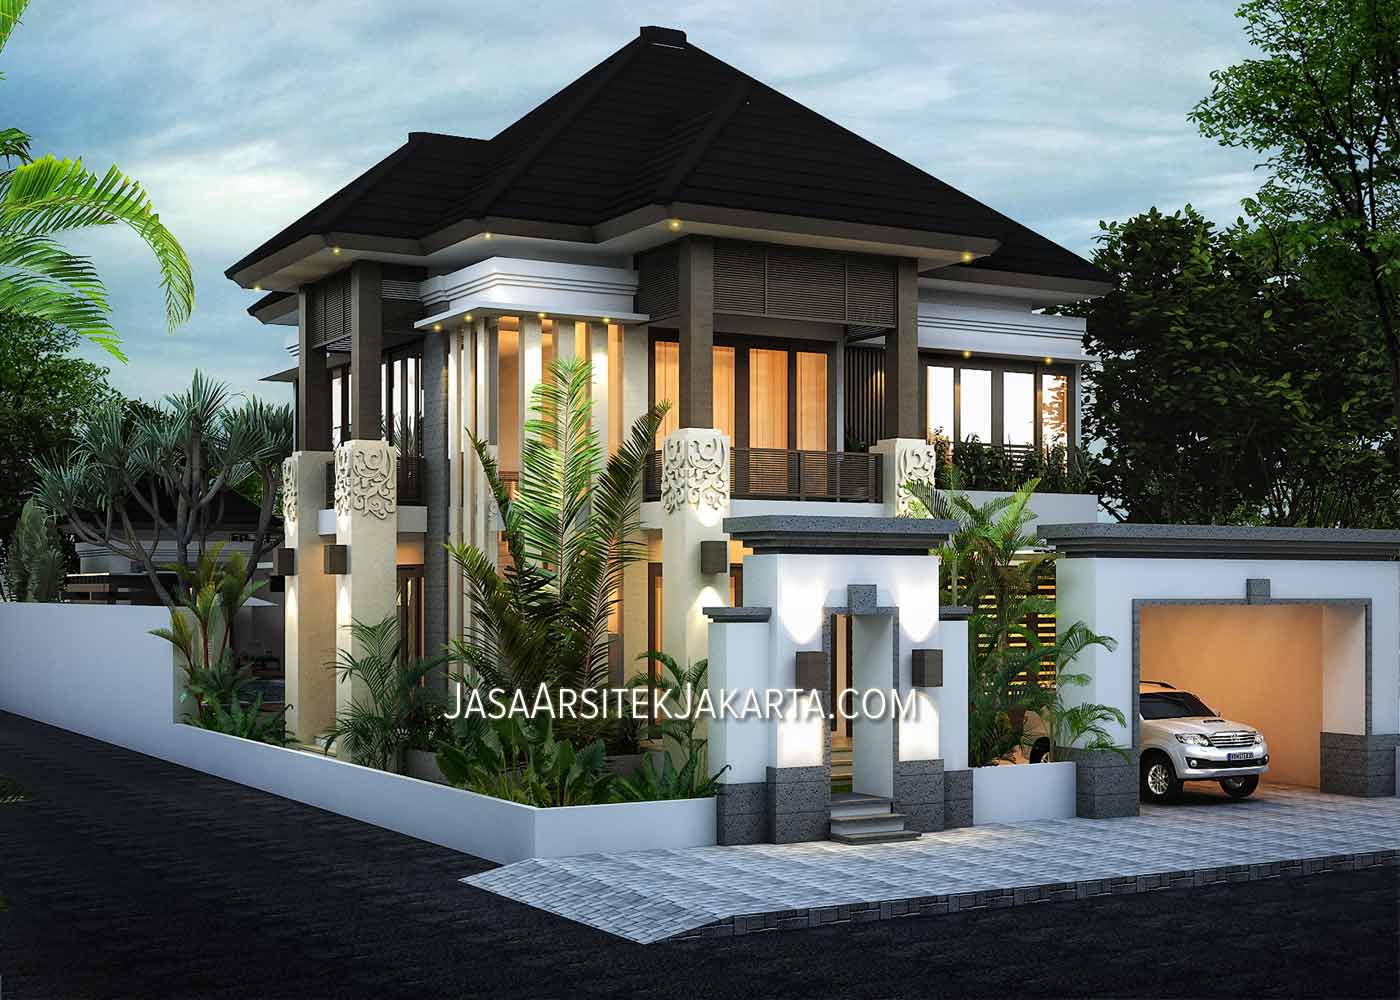 37 Model Desain Rumah Minimalis 2 Lantai Style Bali Kreatif Banget Deh